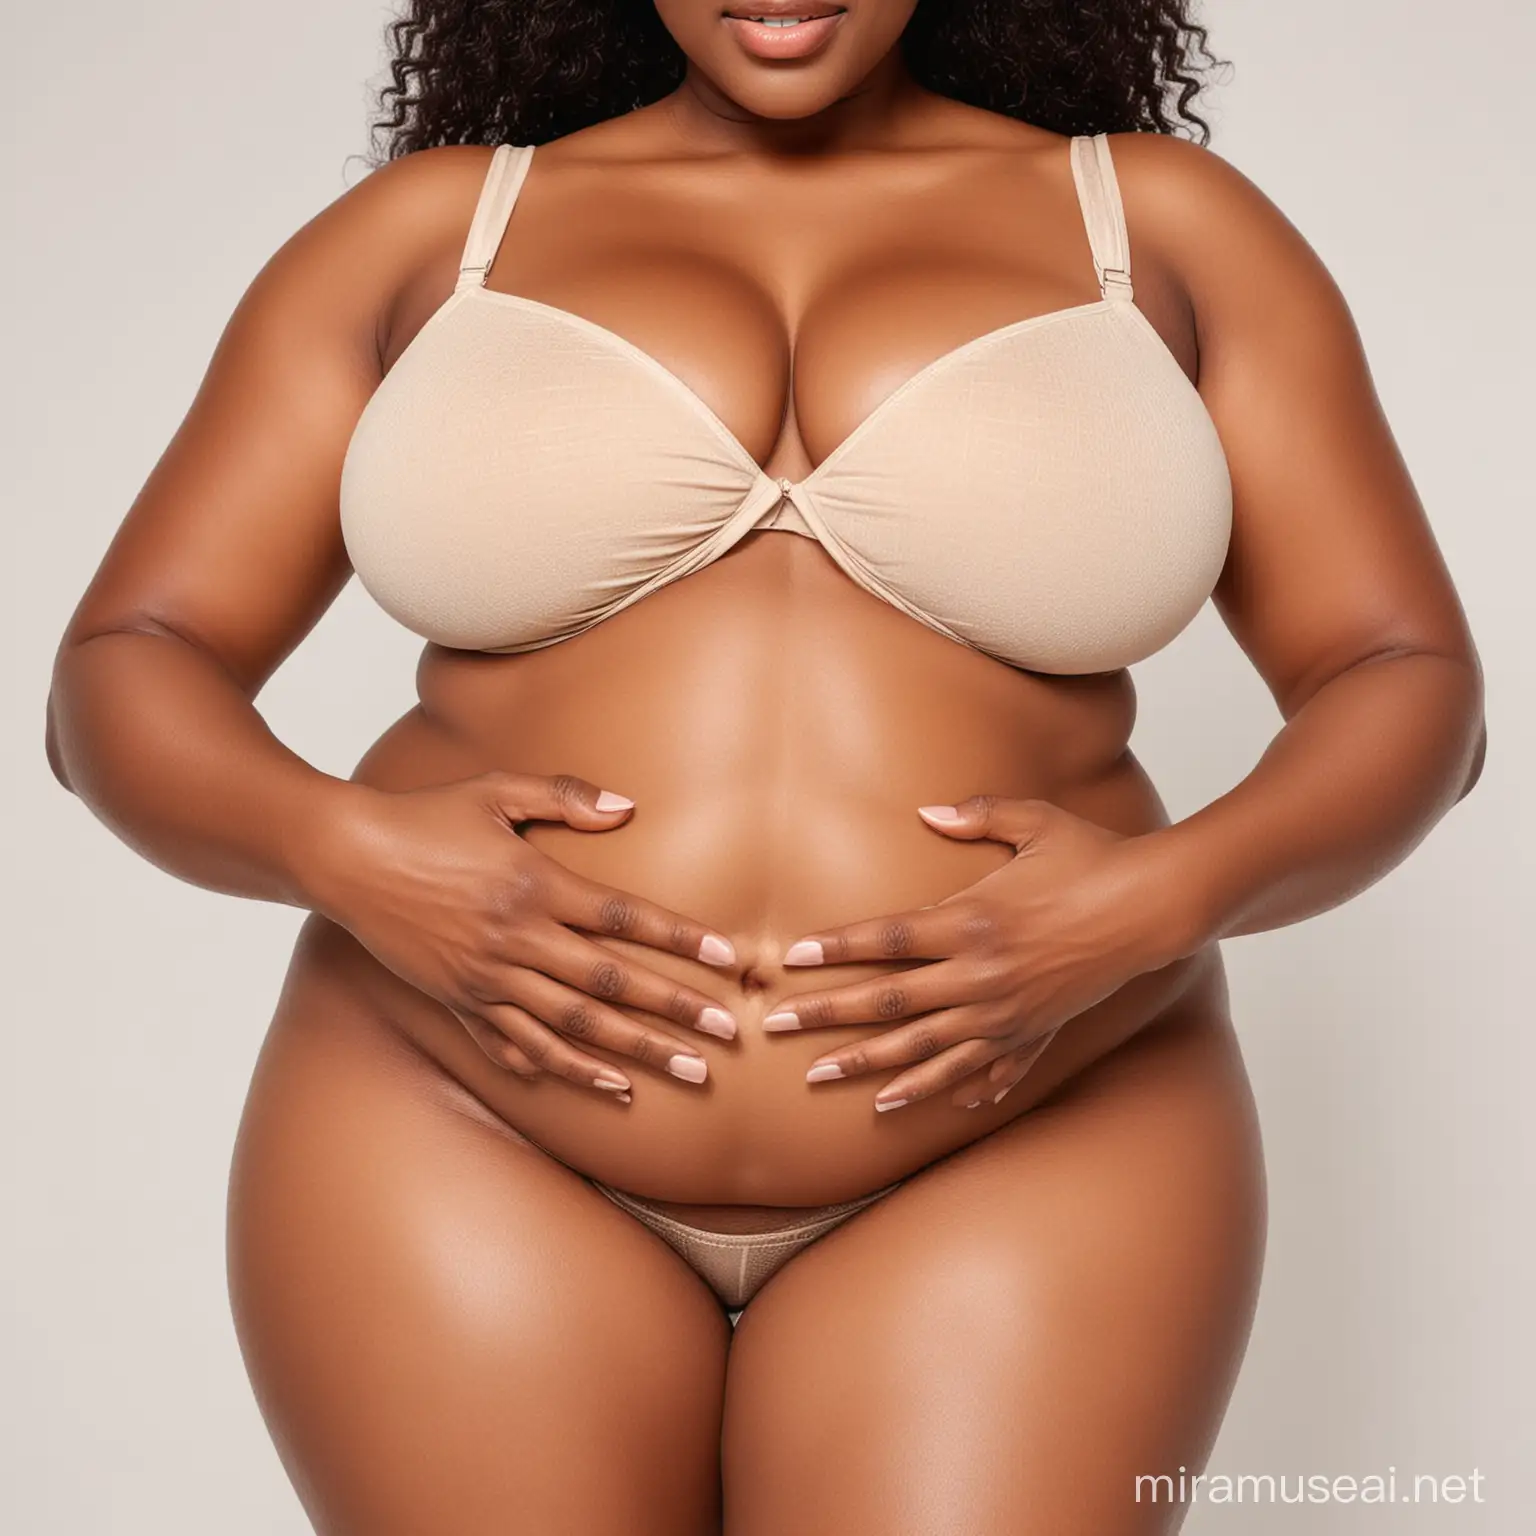 Nigerian Model Embracing Her Curves in Elegant Pose